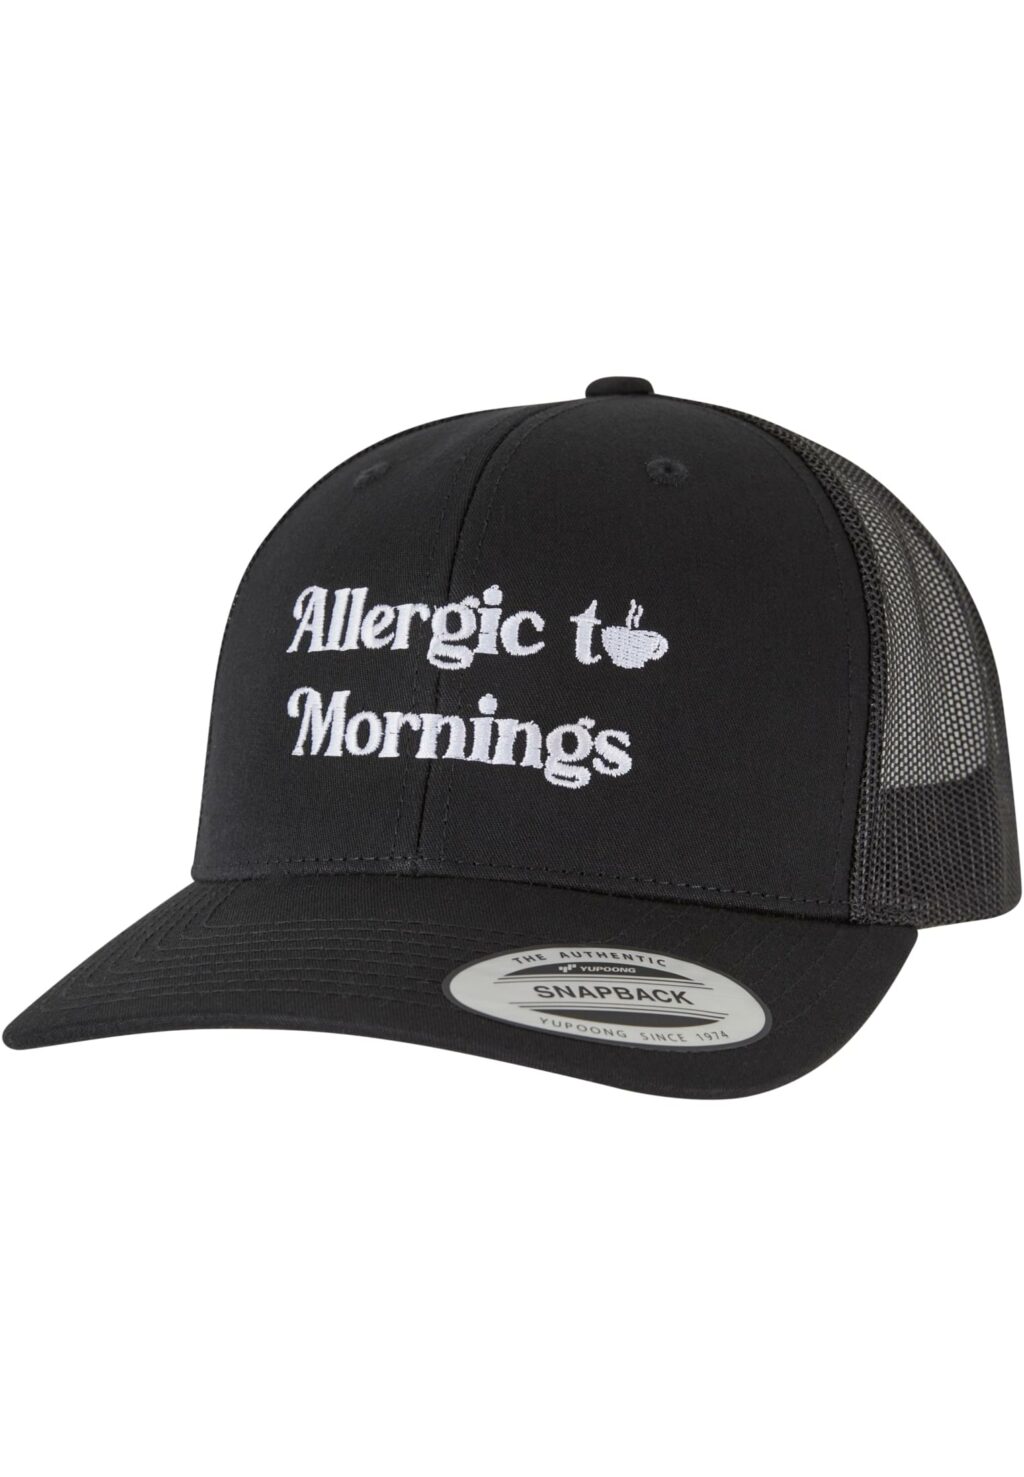 Allergic To Mornings Retro Trucker black one MT2836